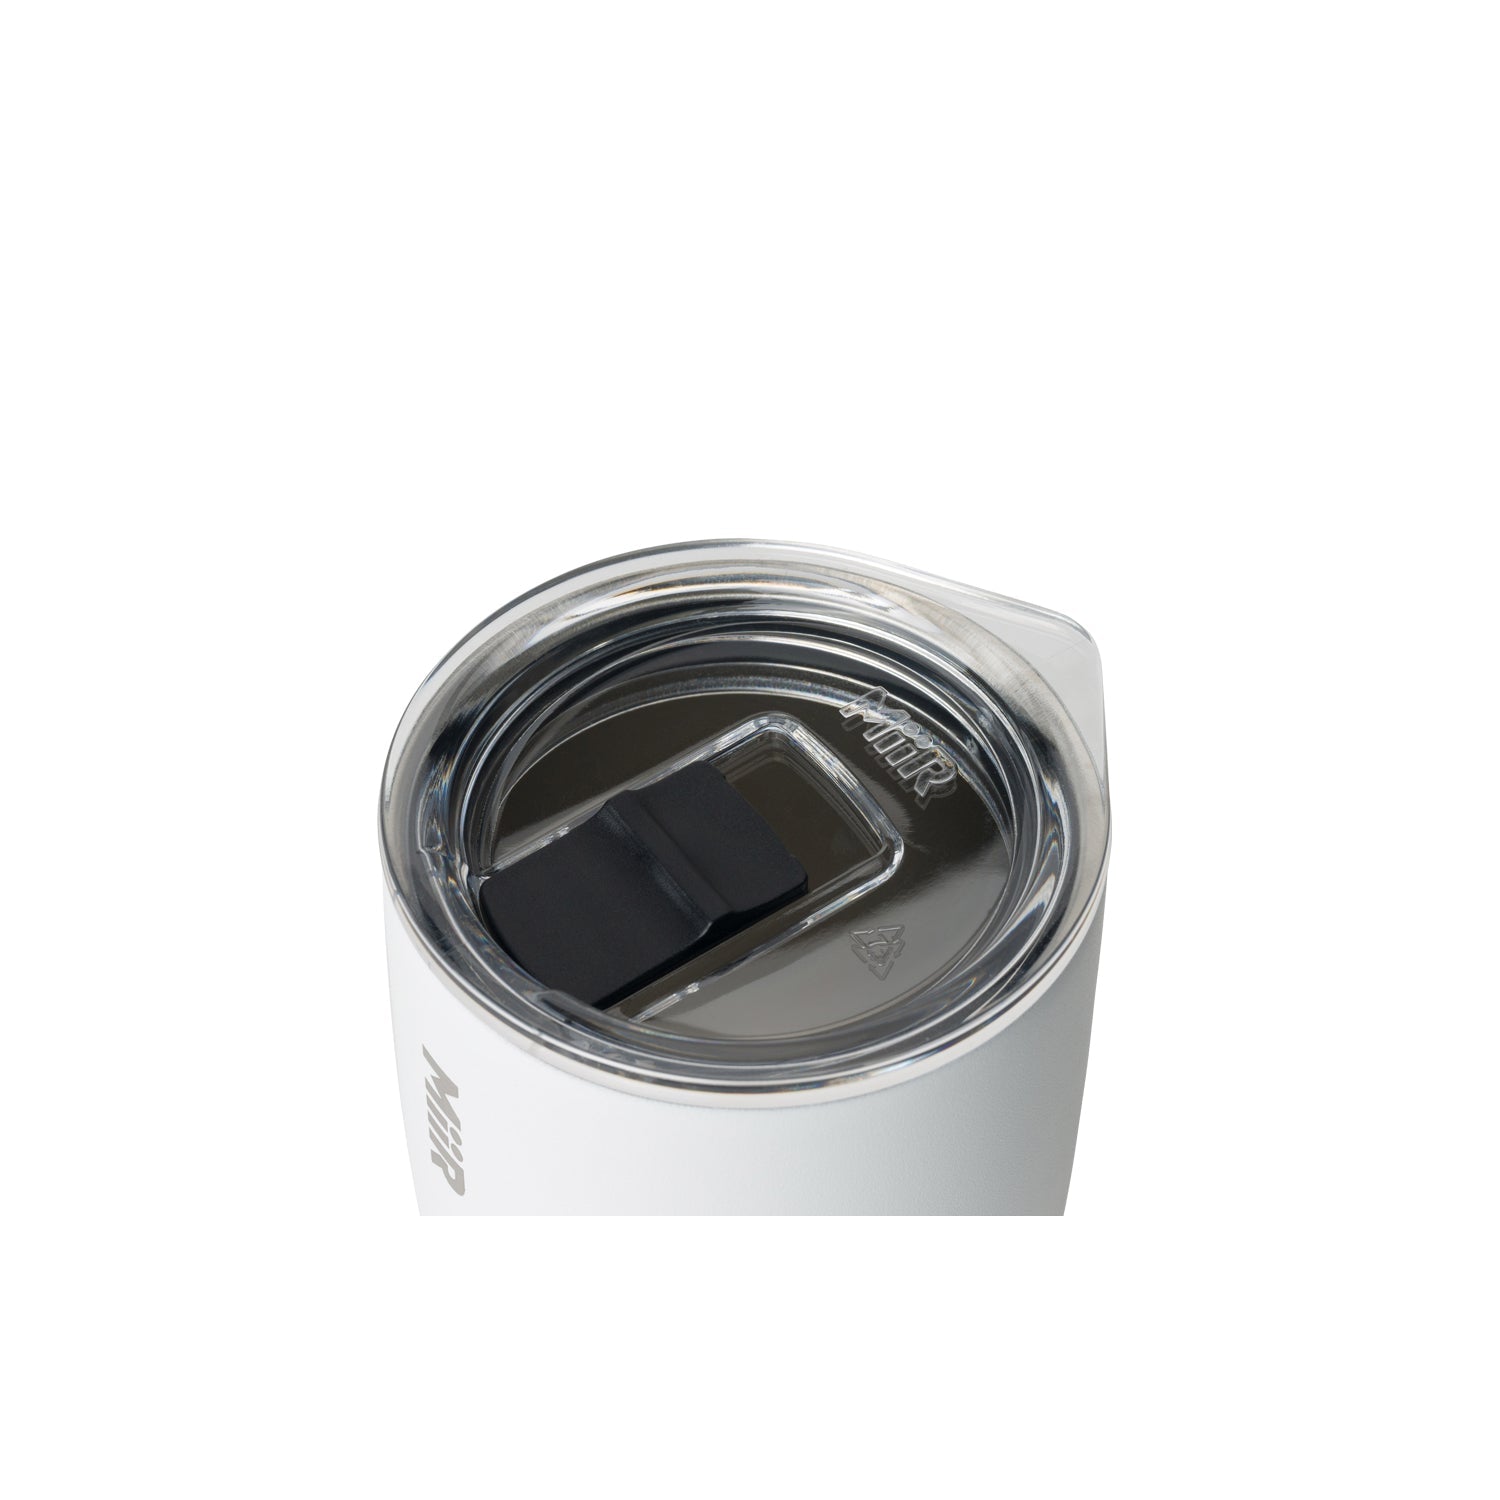 Custom Magnetic Lid Slider Replacement: Fits all Yeti Rambler Magnetic  Sliding Lids. BPA-Free. For Magslider Lids.